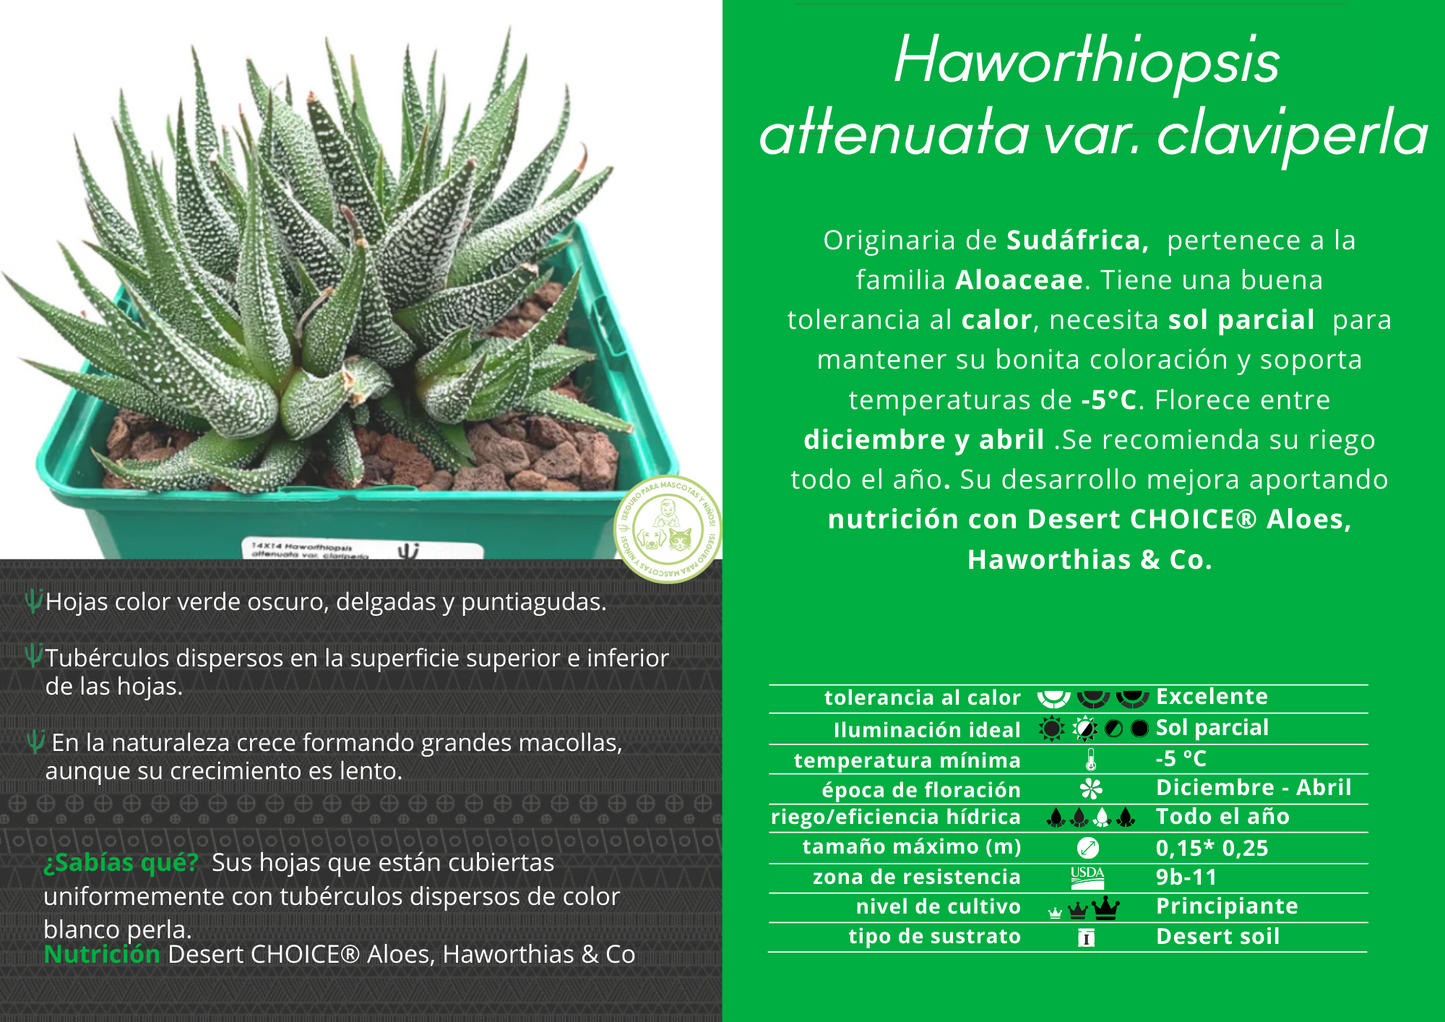 Haworthiopsis attenuata var. clairpearl